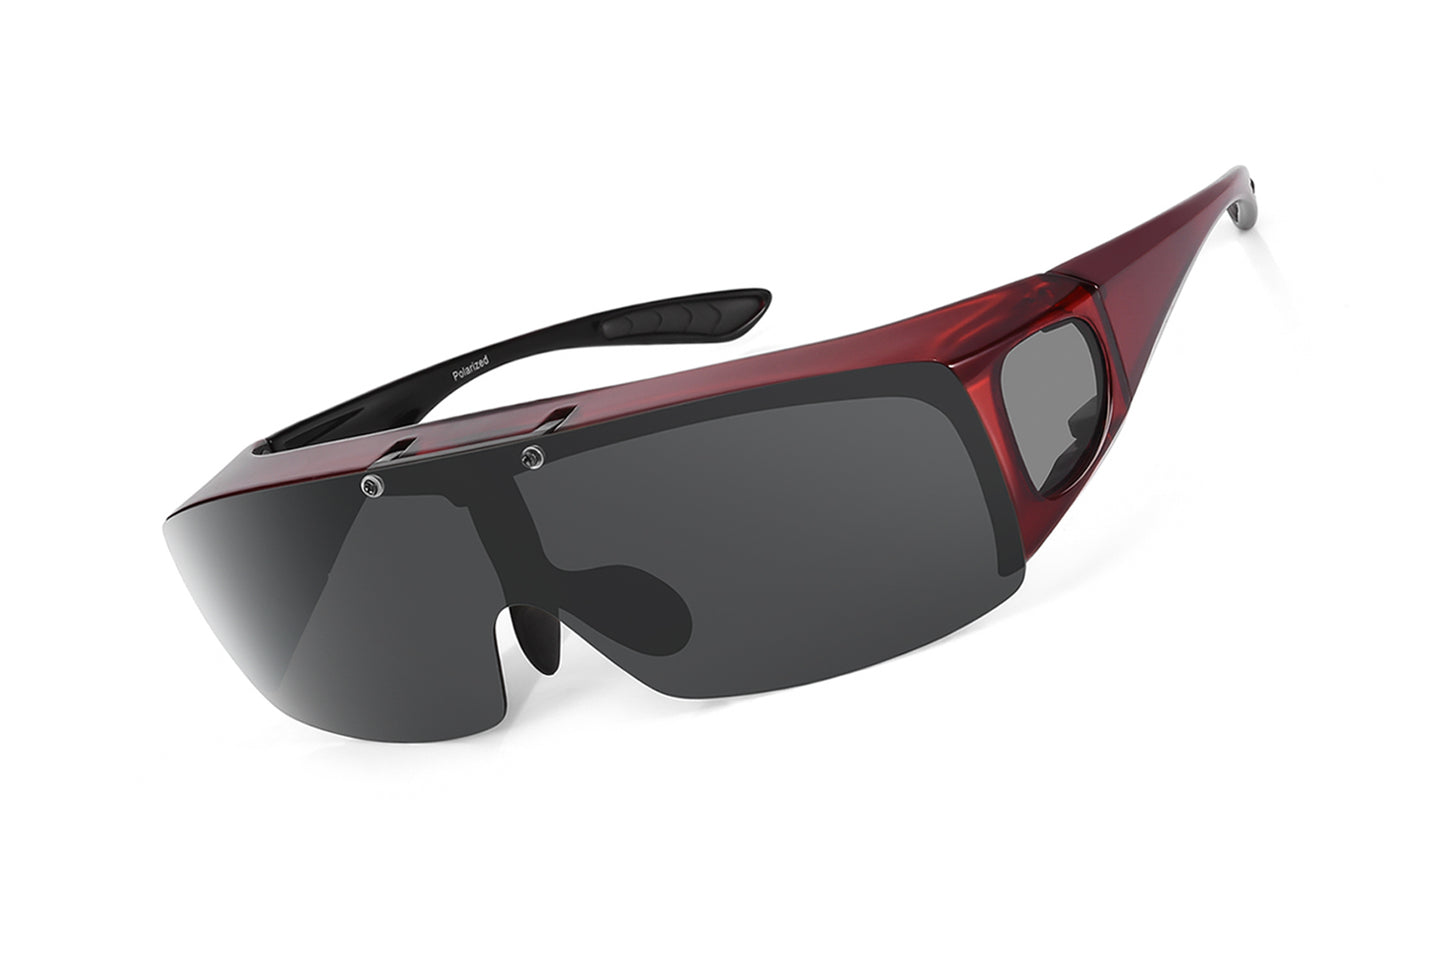 Flip Up丨Fit Over Sunglasses丨Polarized DY013